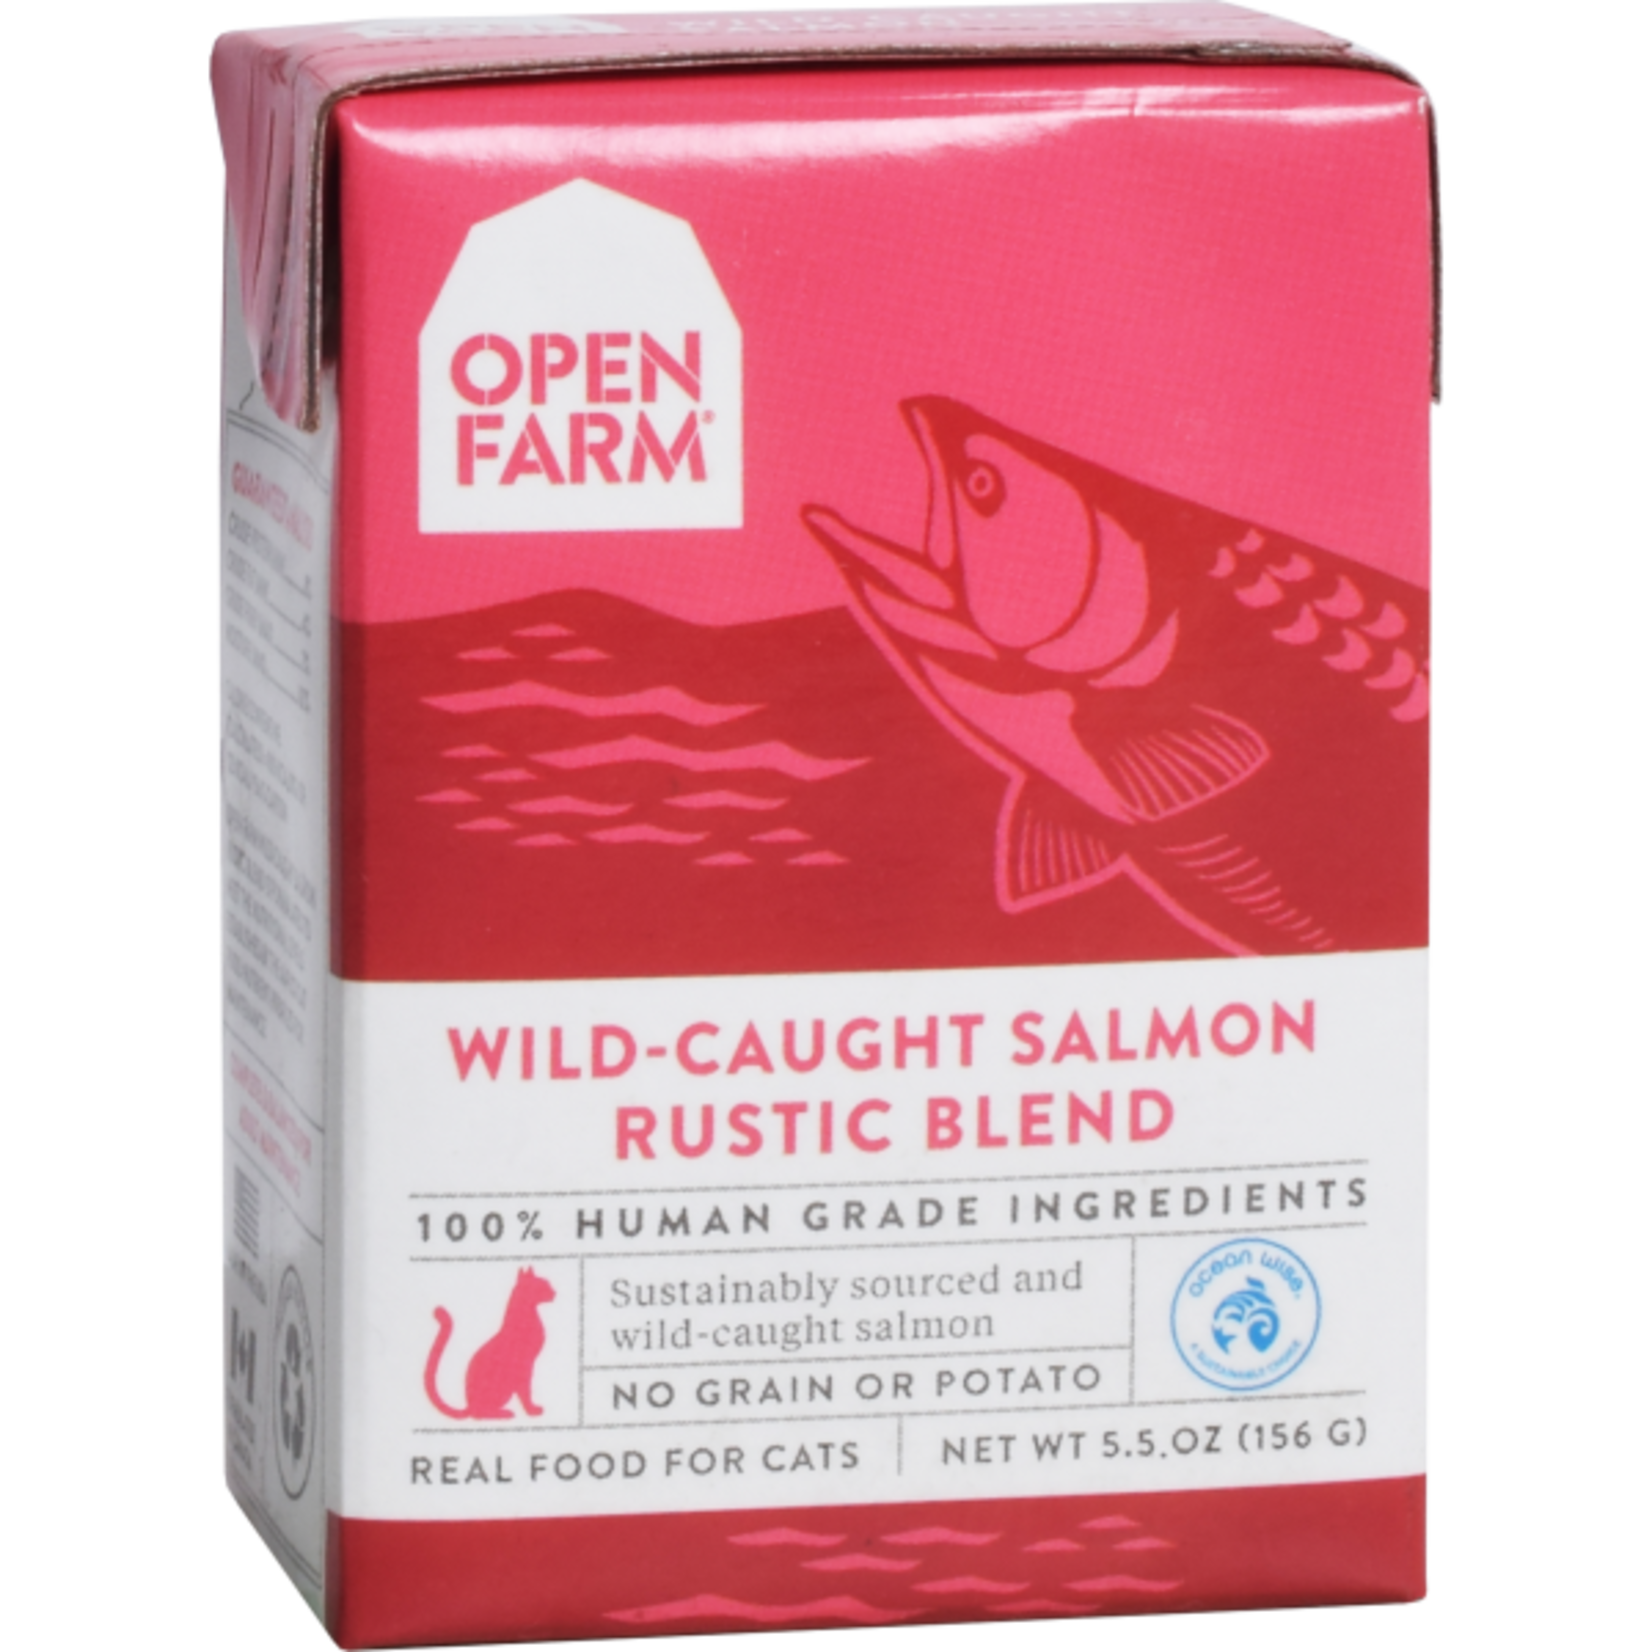 Open Farm Open Farm Cat Wild-Caught Salmon Rustic Blend Tetra Pak 5.5oz